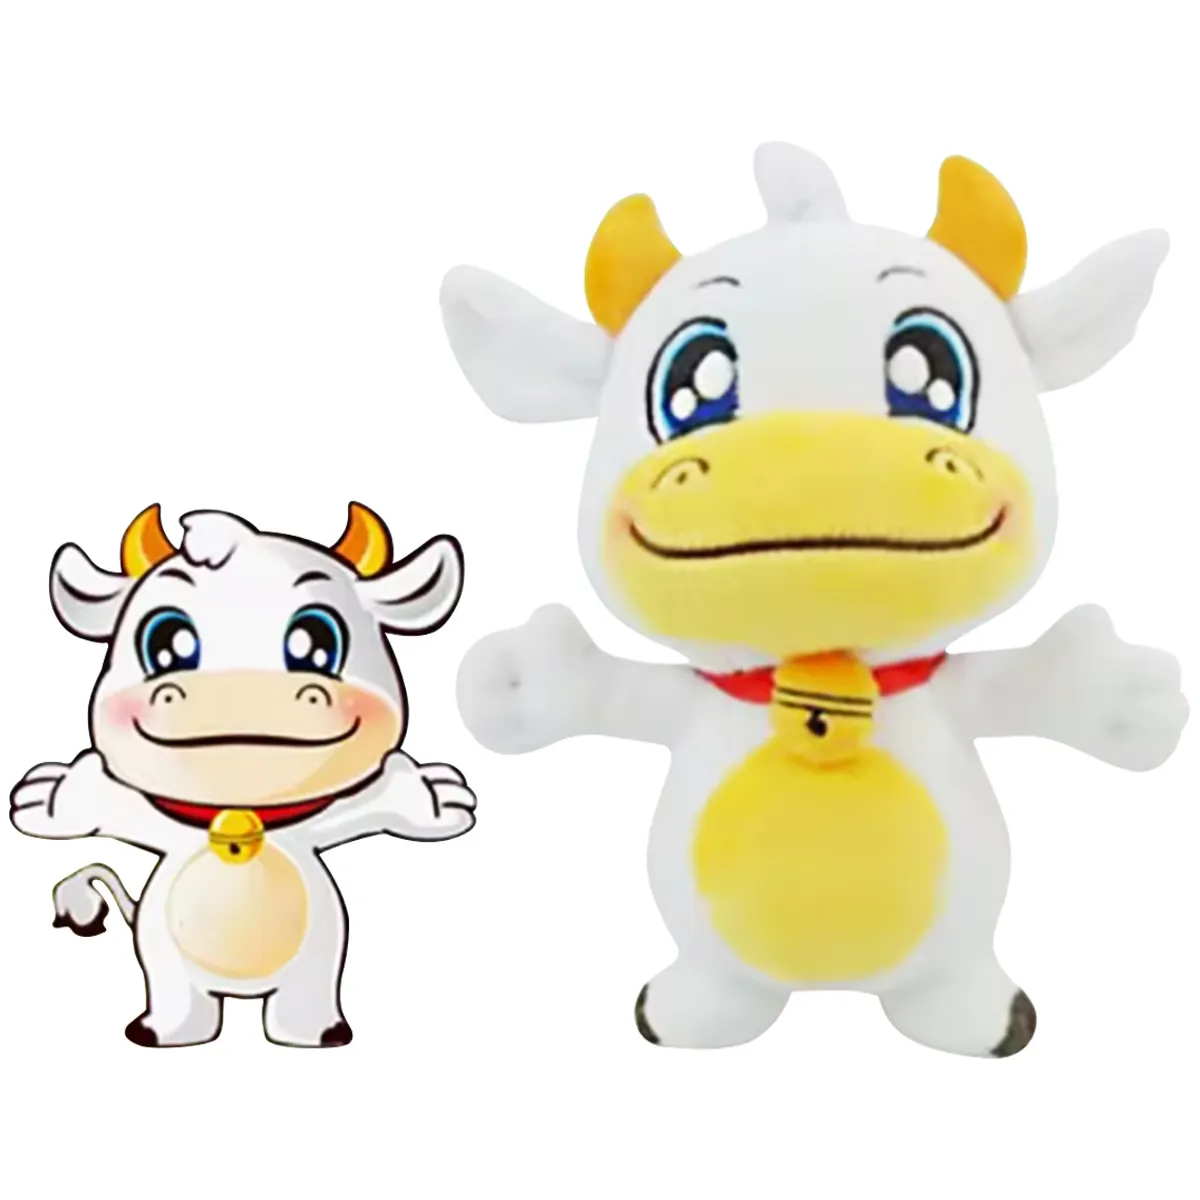 CustomPlushMaker haz tu propio animal de peluche de juguete Tigre vaca oso de peluche fabricantes de muñecos de peluche de juguete personalizado